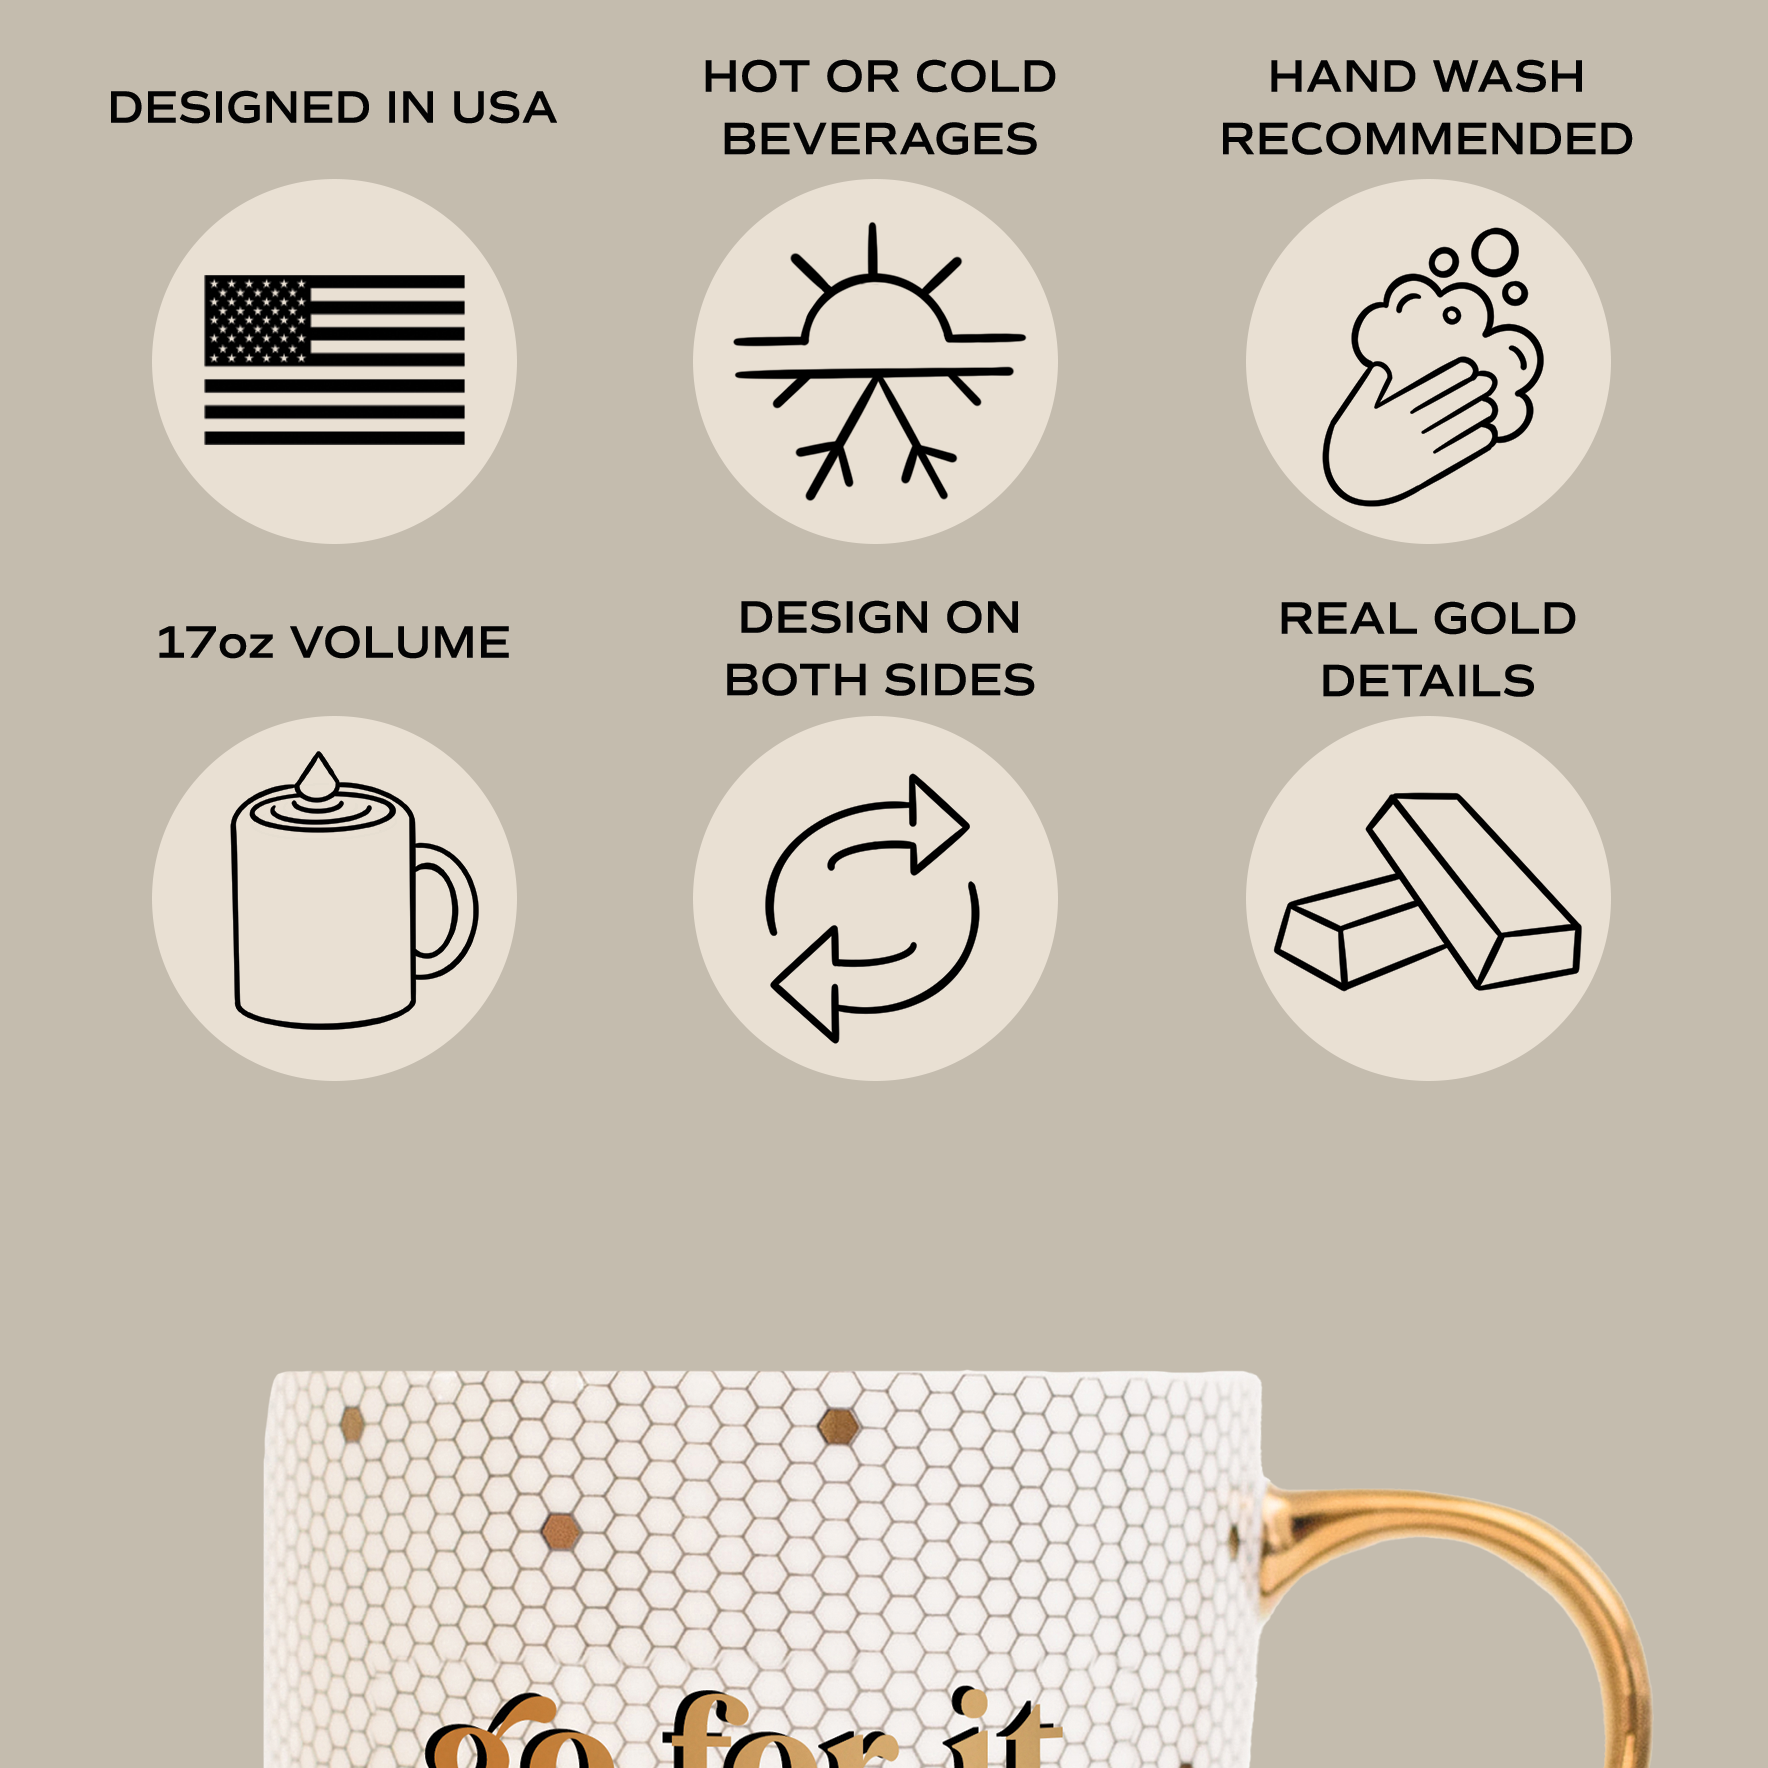 Warm & Cozy Gold Tile Coffee Mug